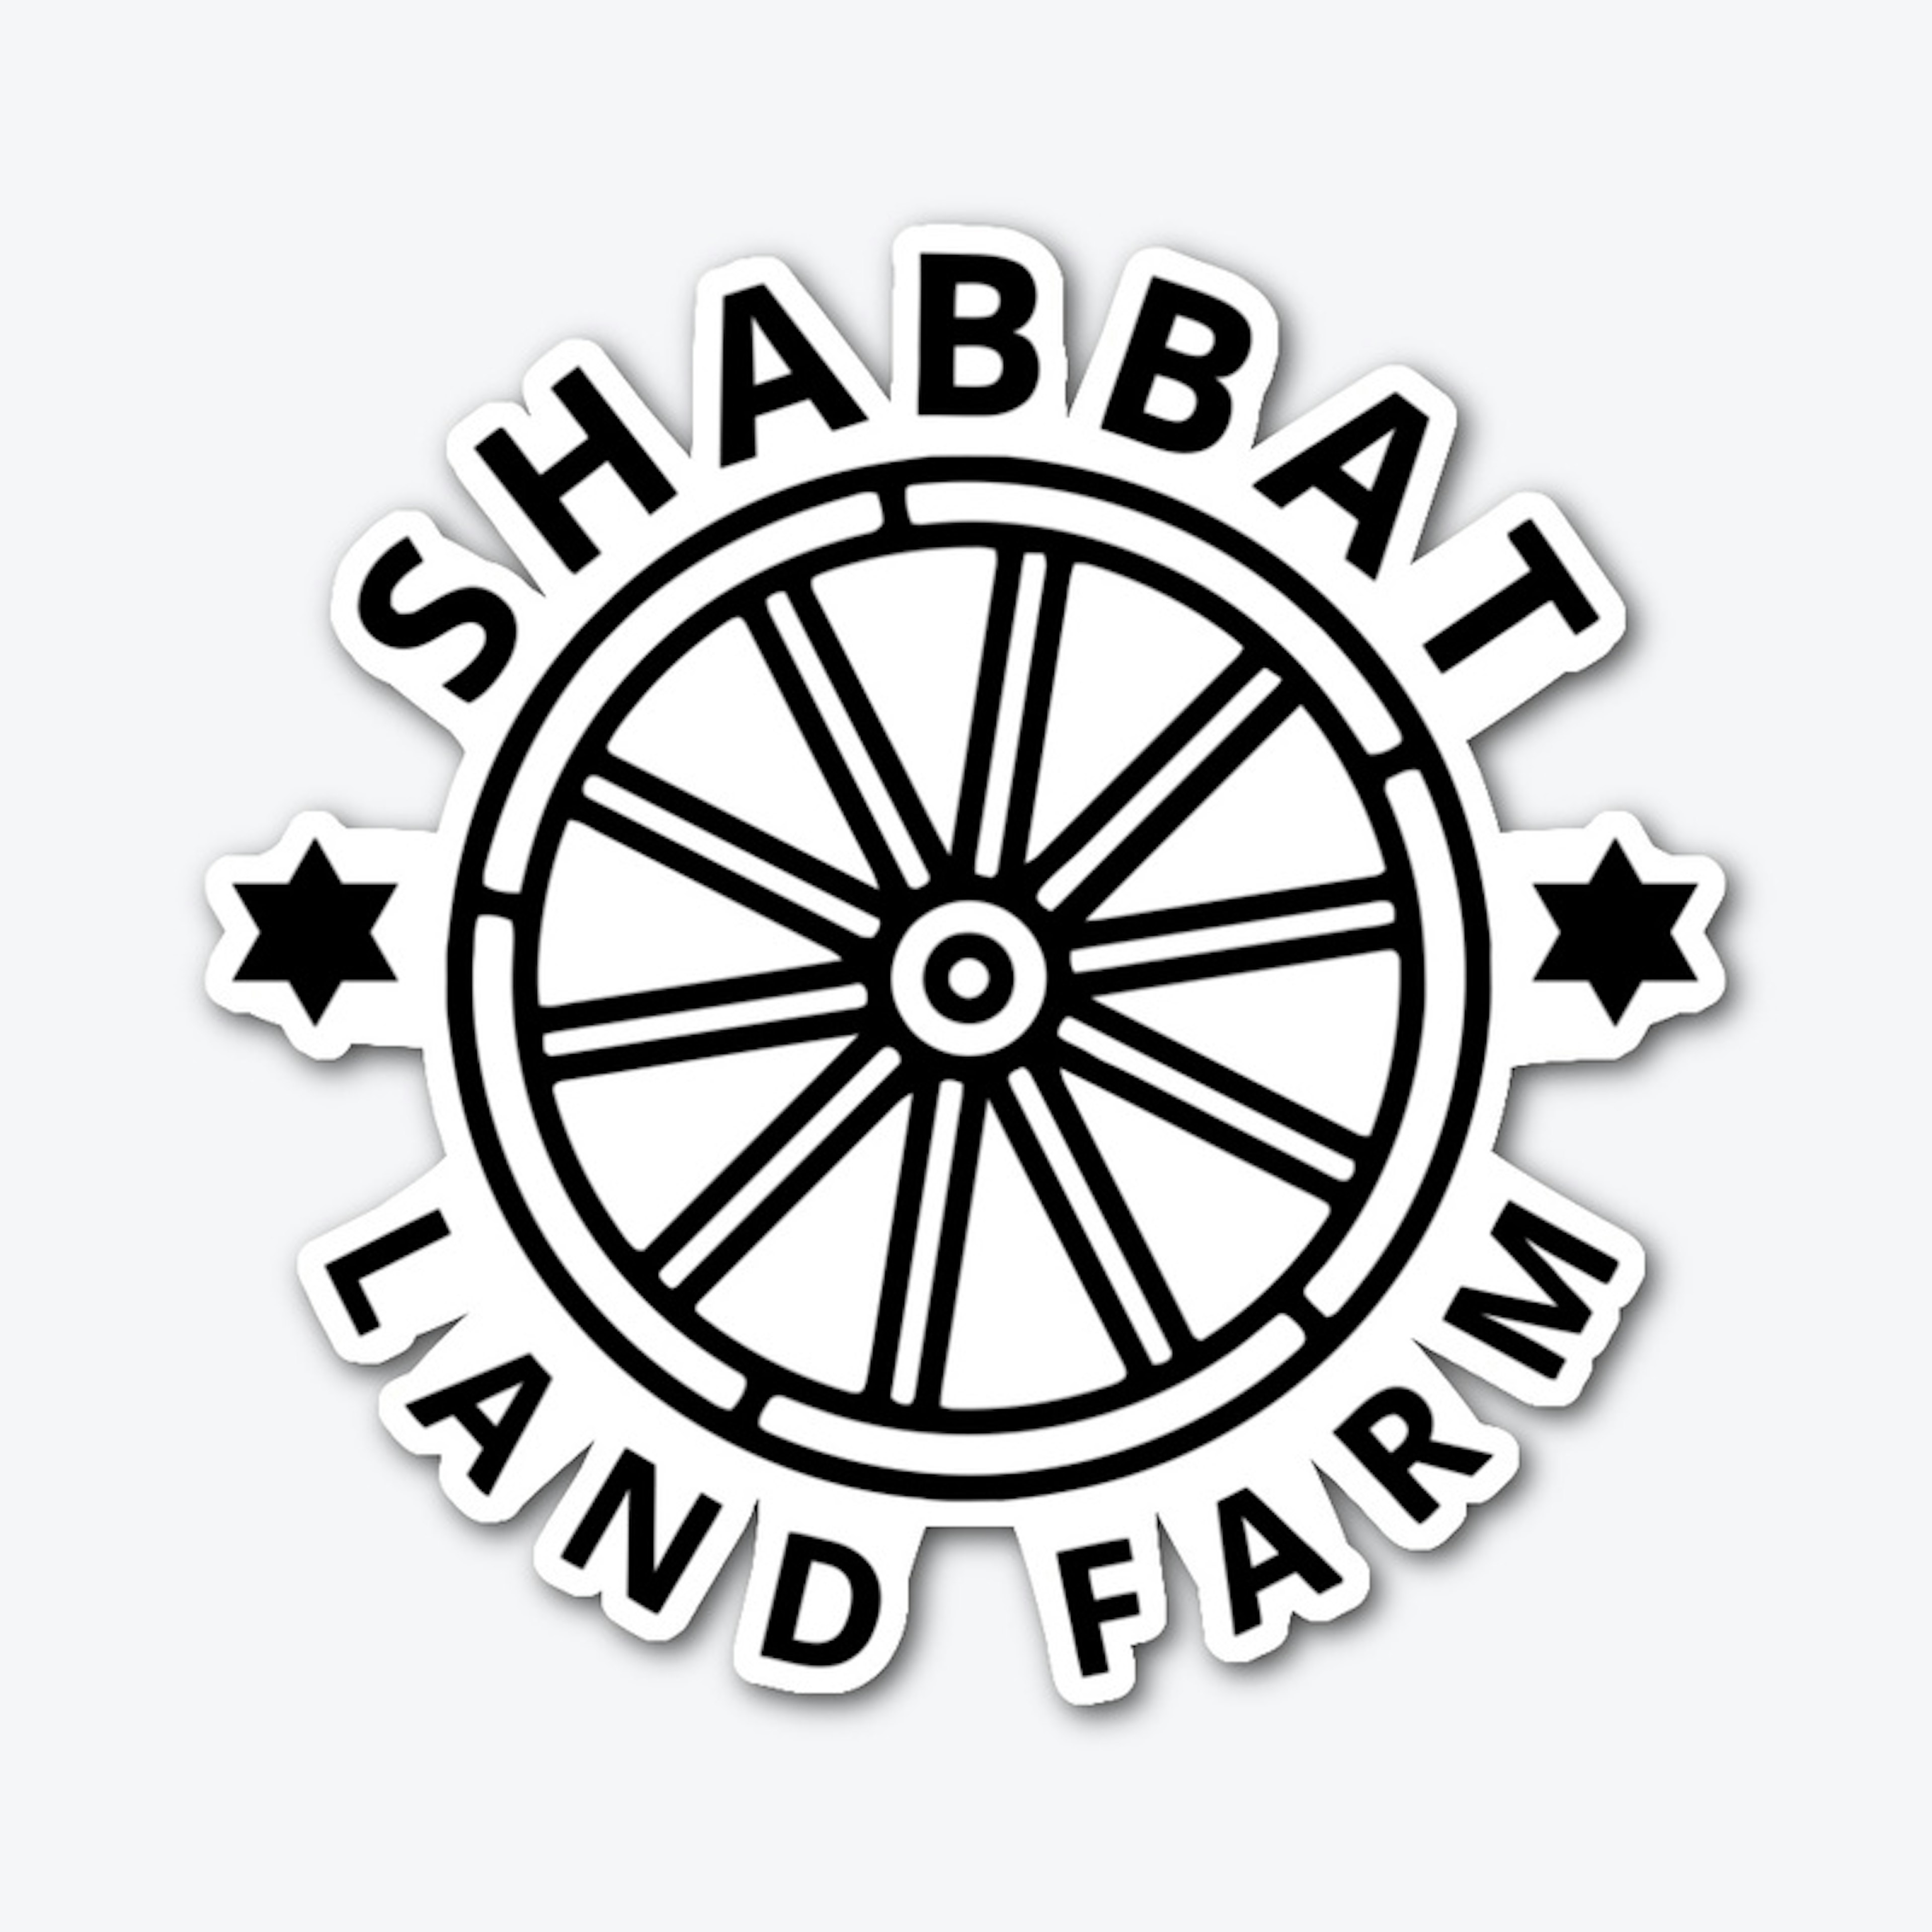 Shabbat Land Farm Collection